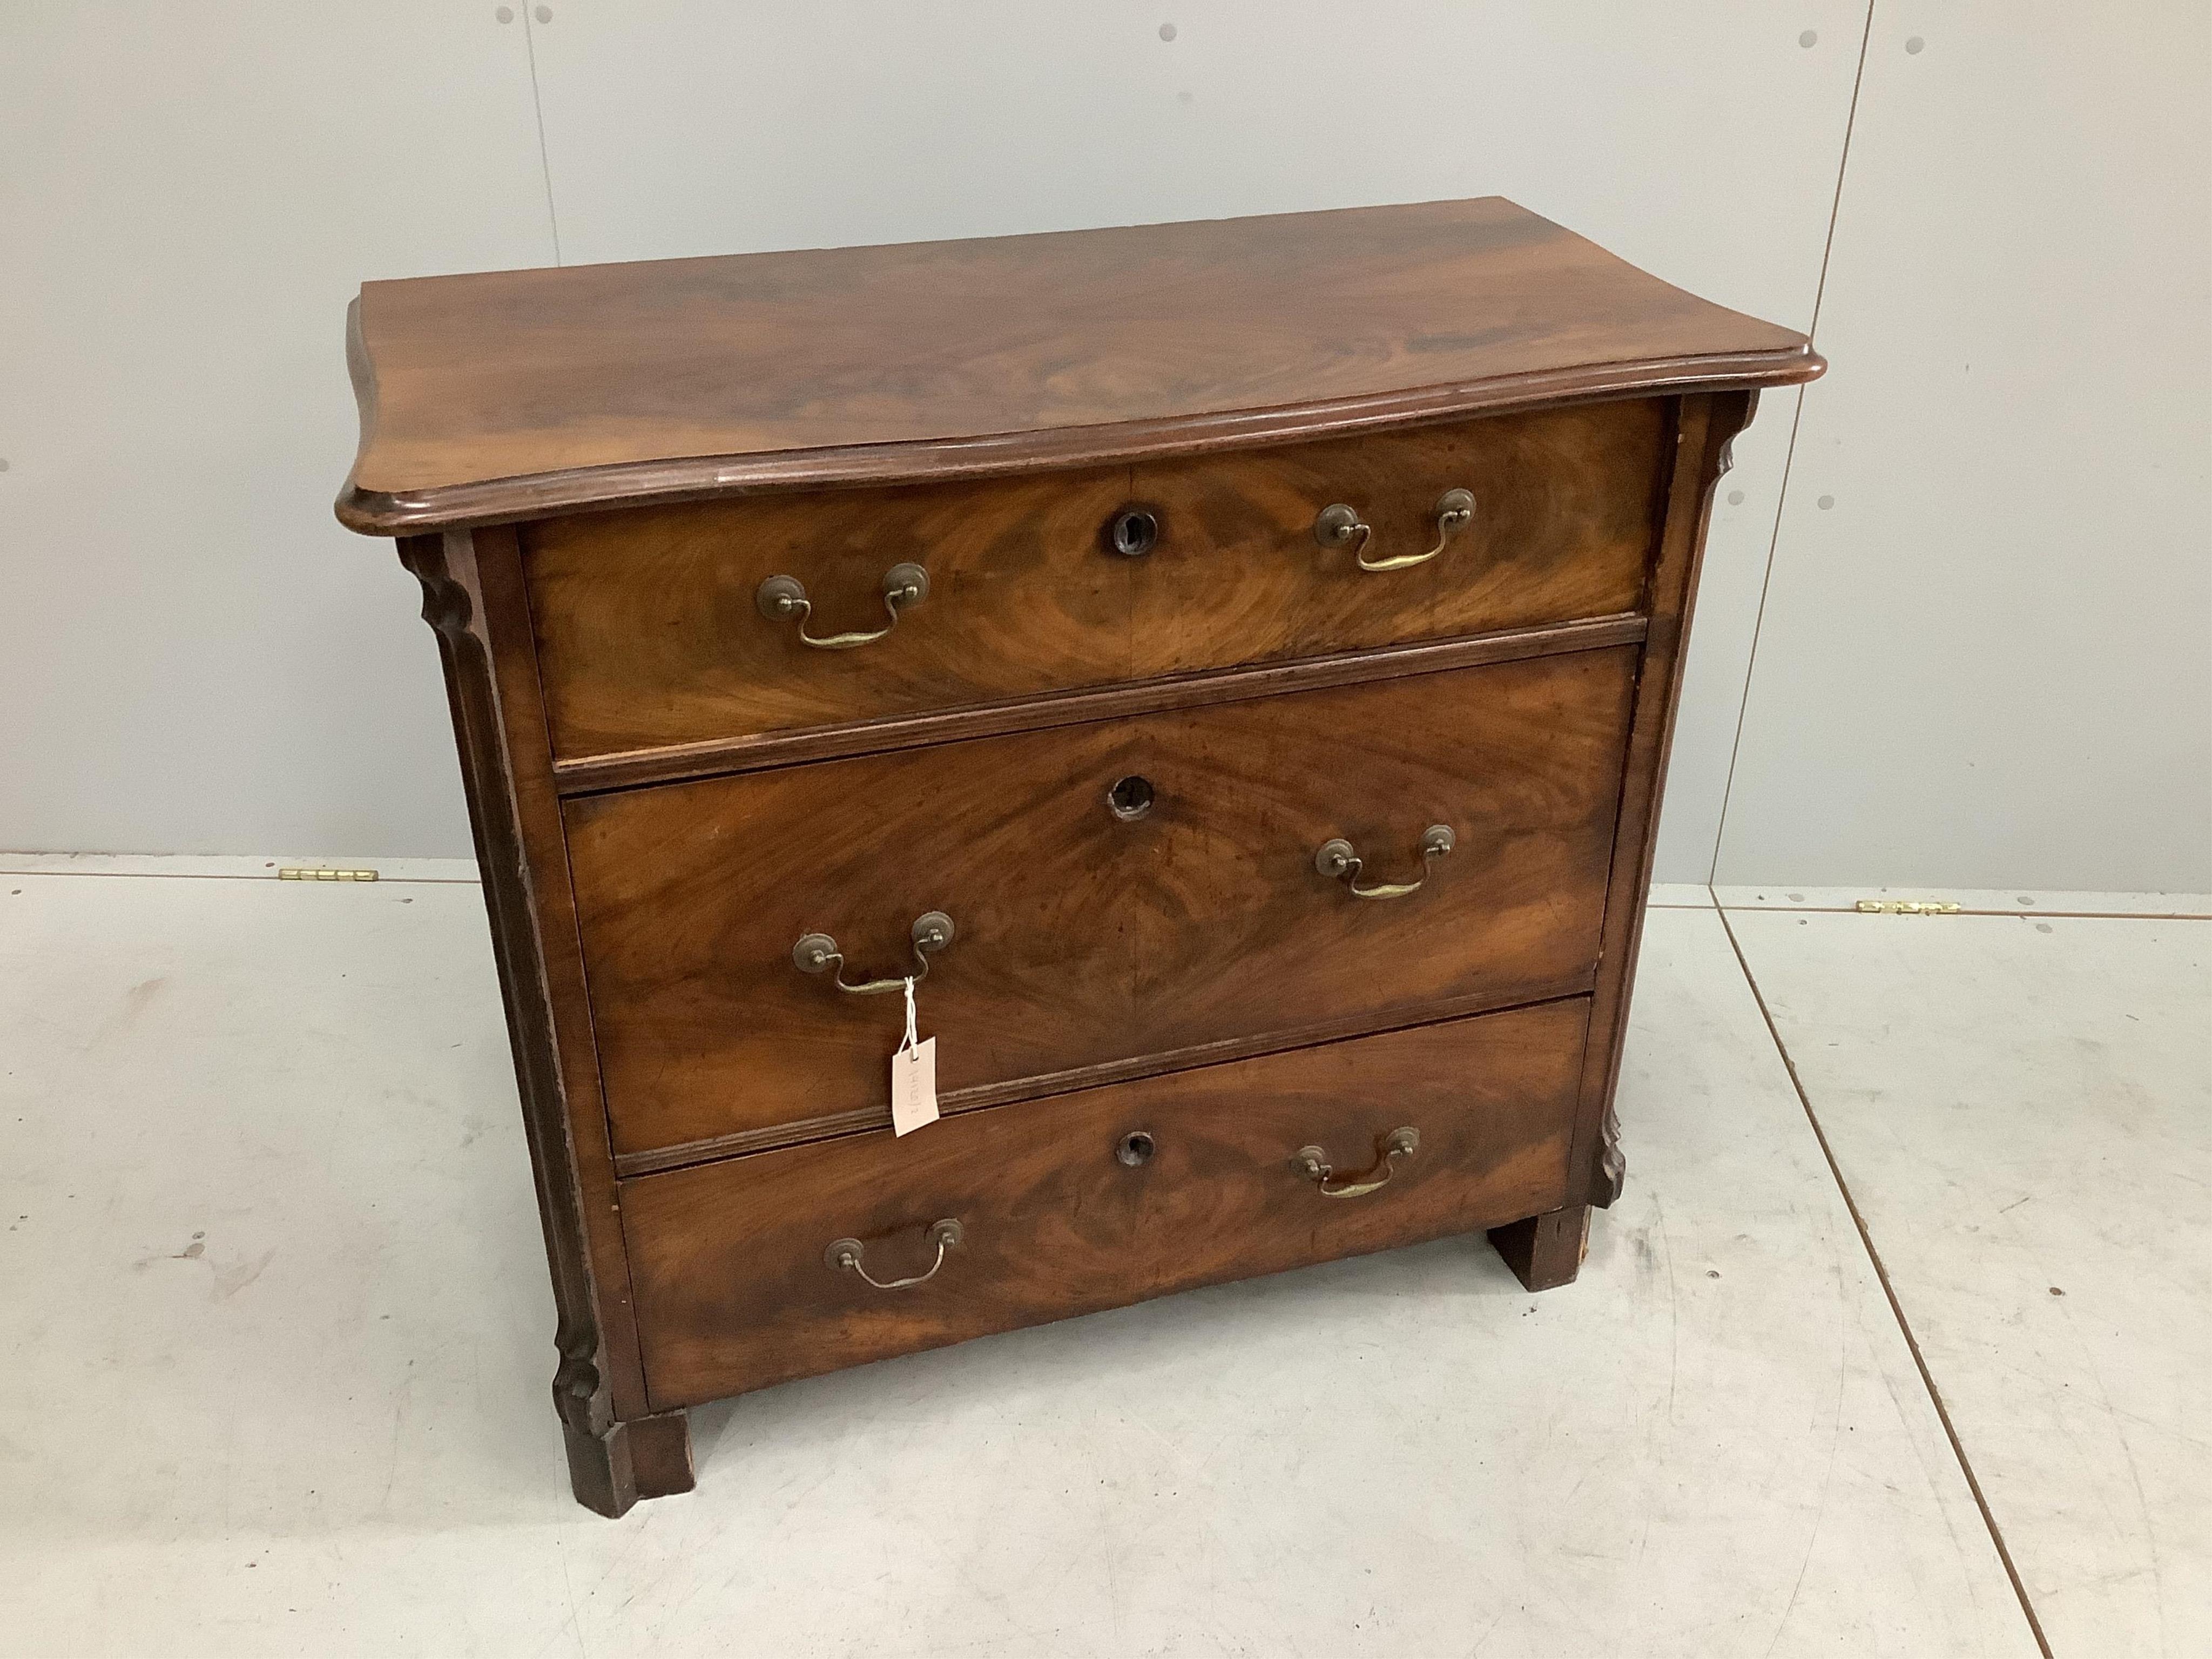 A 19th century Continental mahogany three drawer chest, width 92cm, depth 46cm, height 81cm